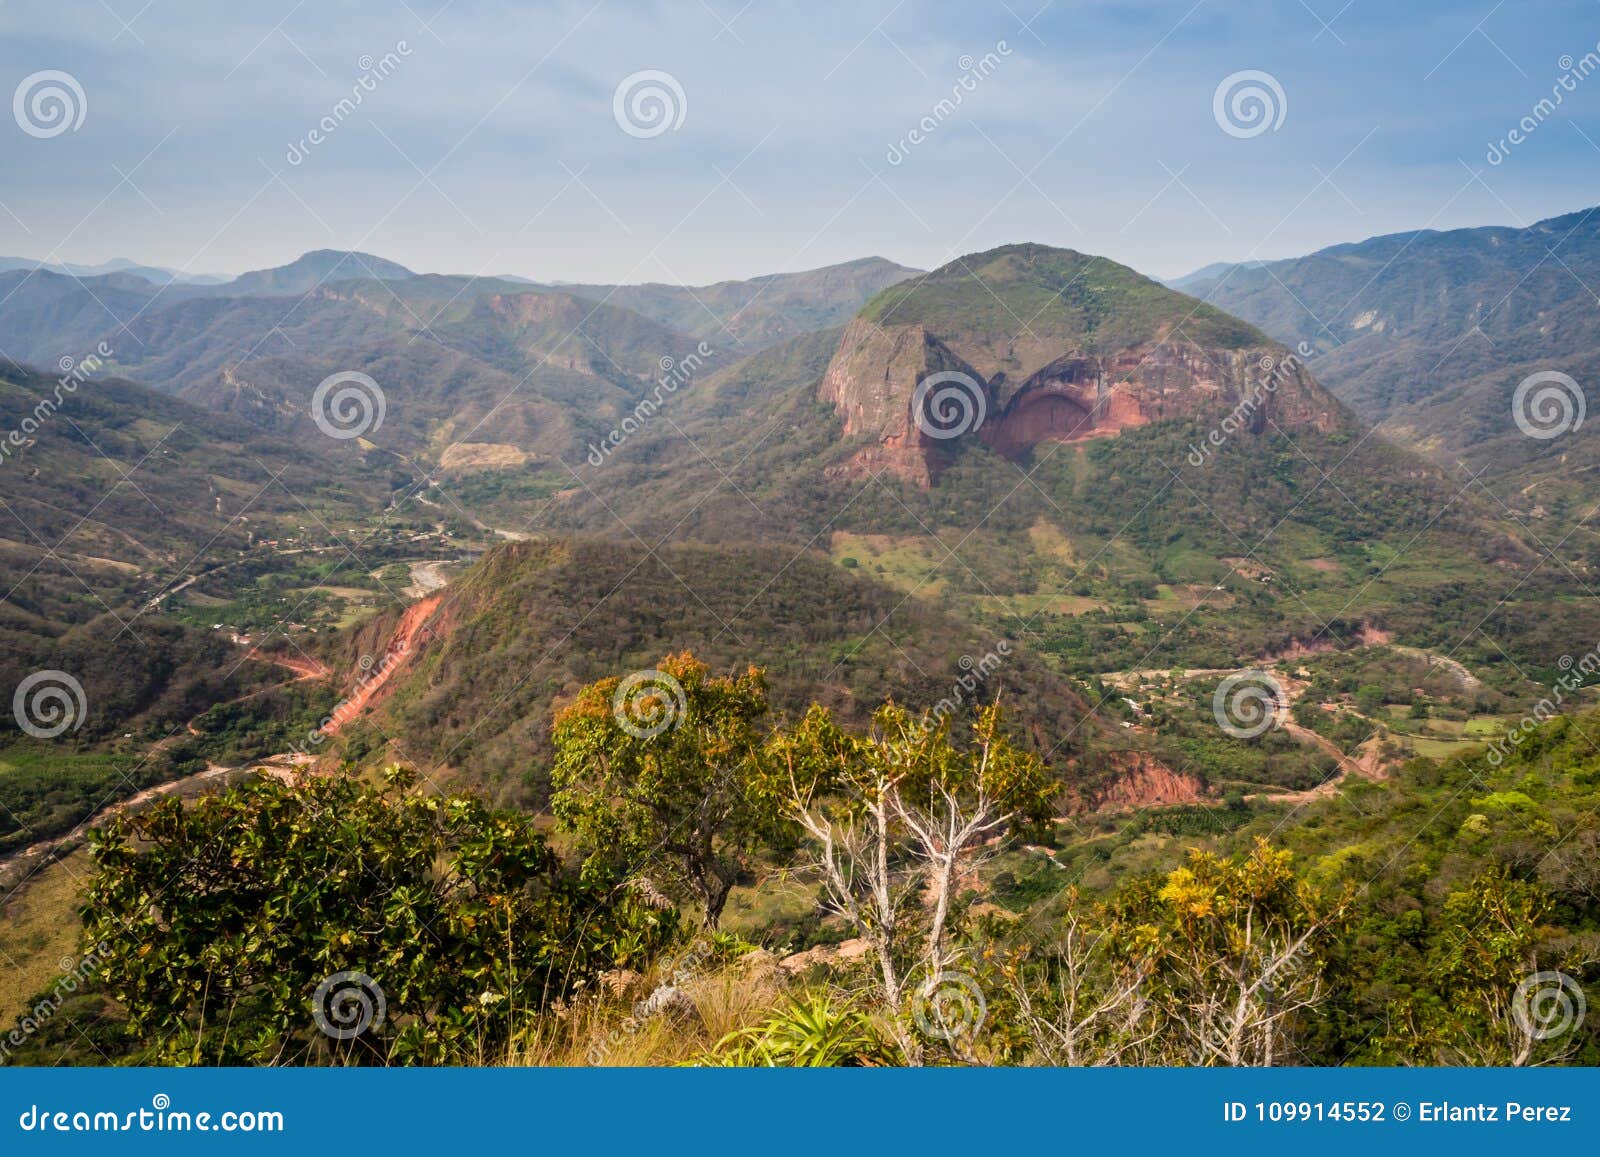 landscape of the amboro national park in bolivia